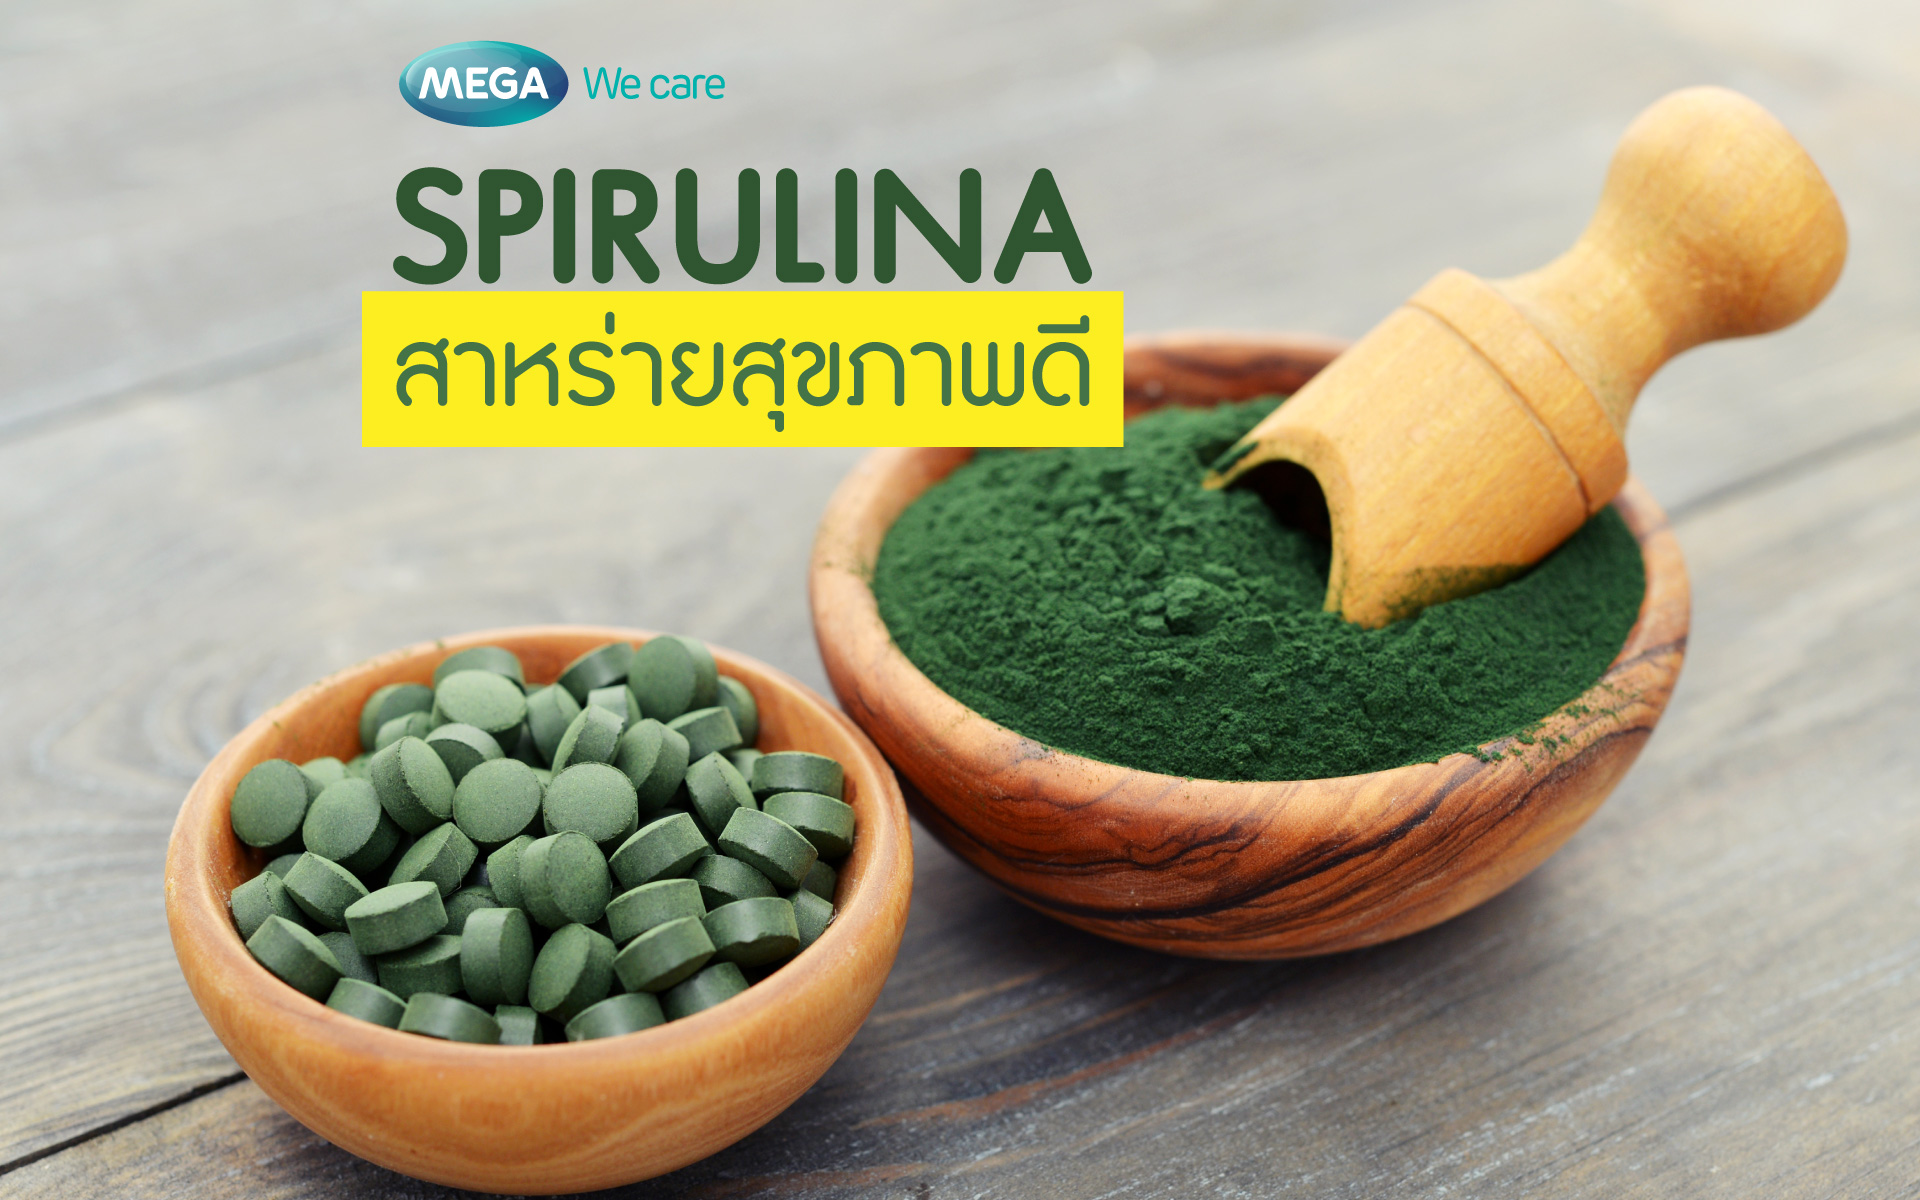 'Spirulina', Powerful aquatic nutrients for your health.